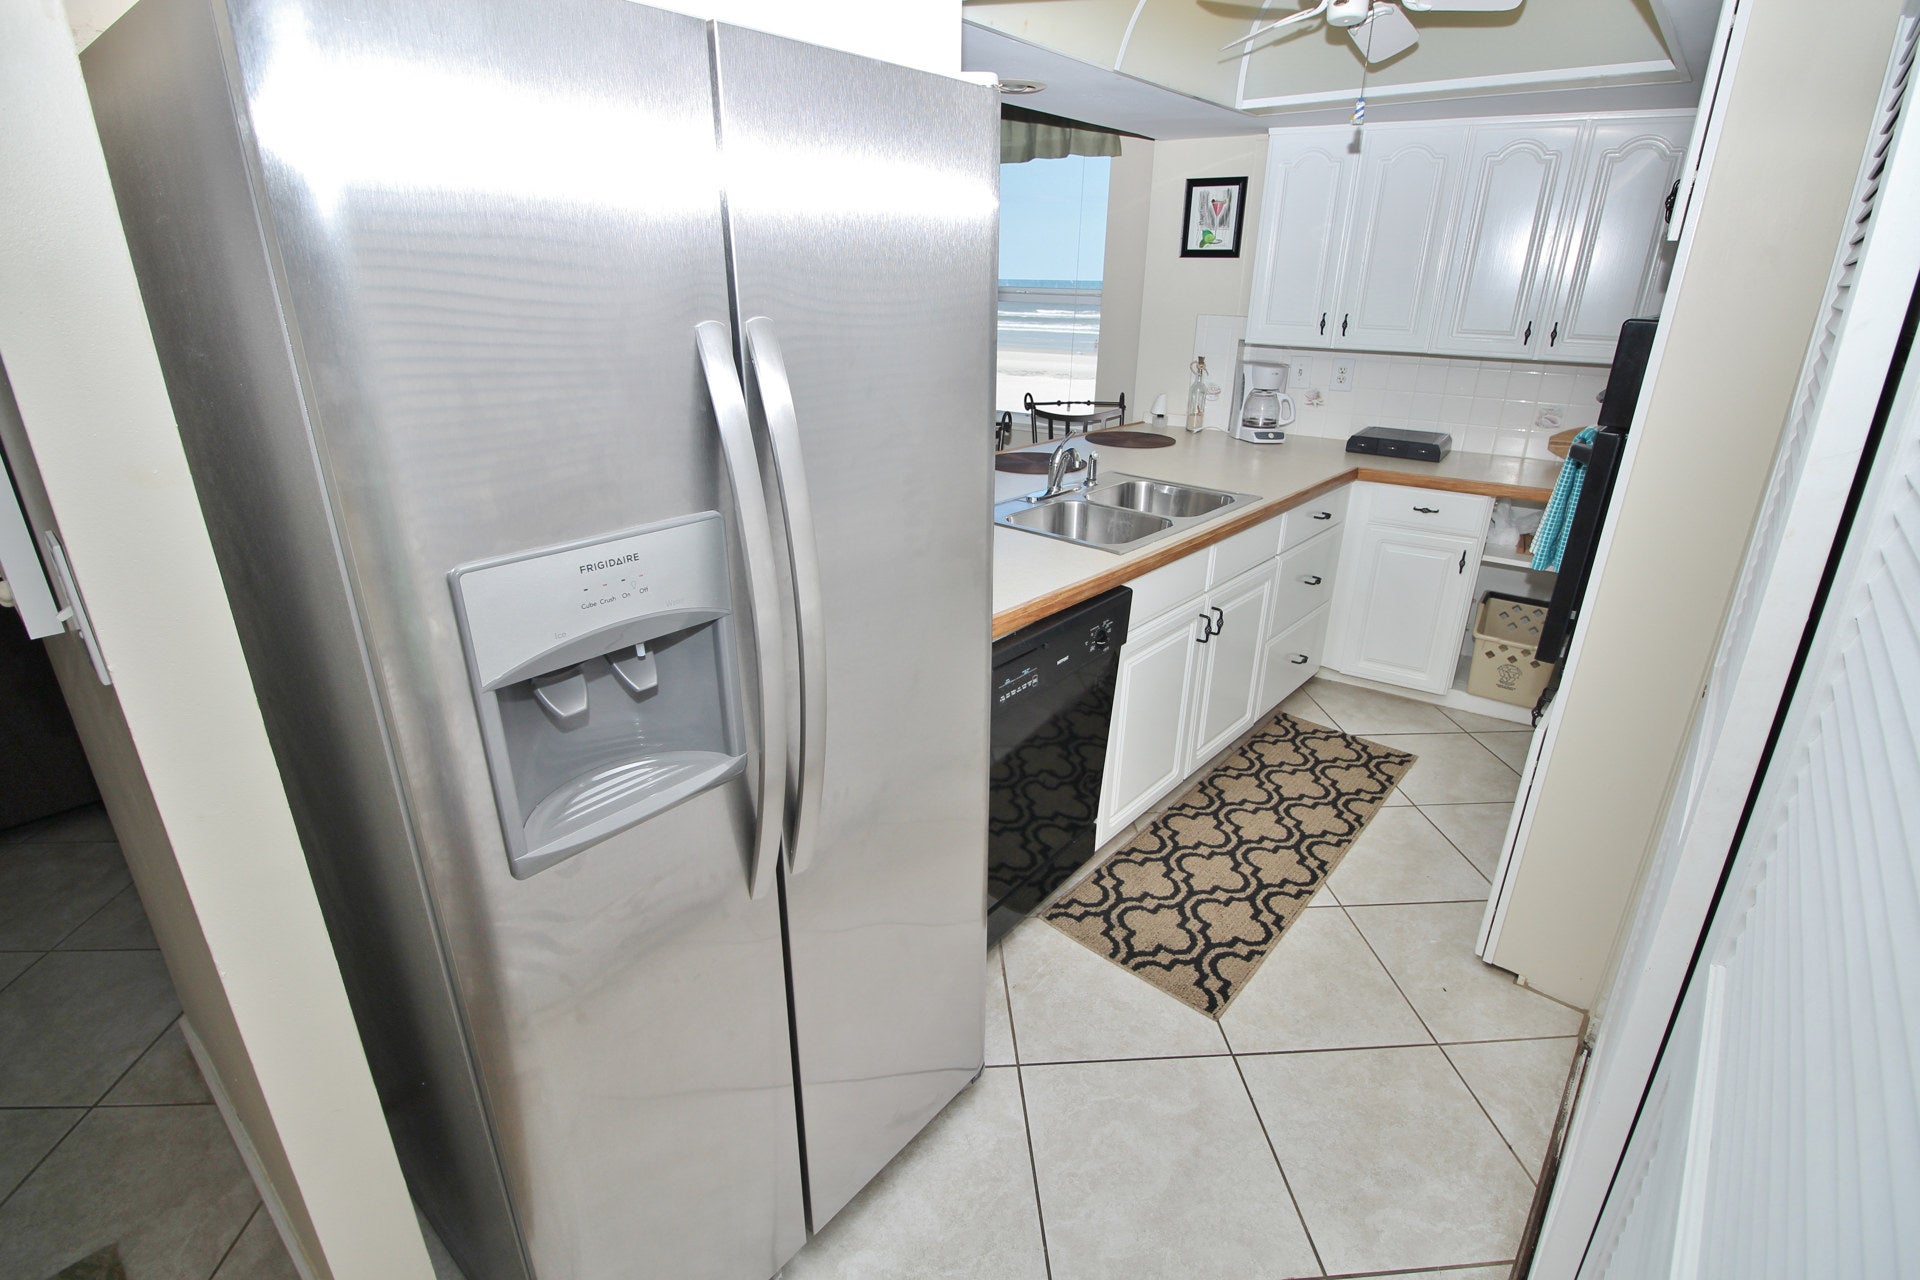 Stainless steel fridge in the kitchen